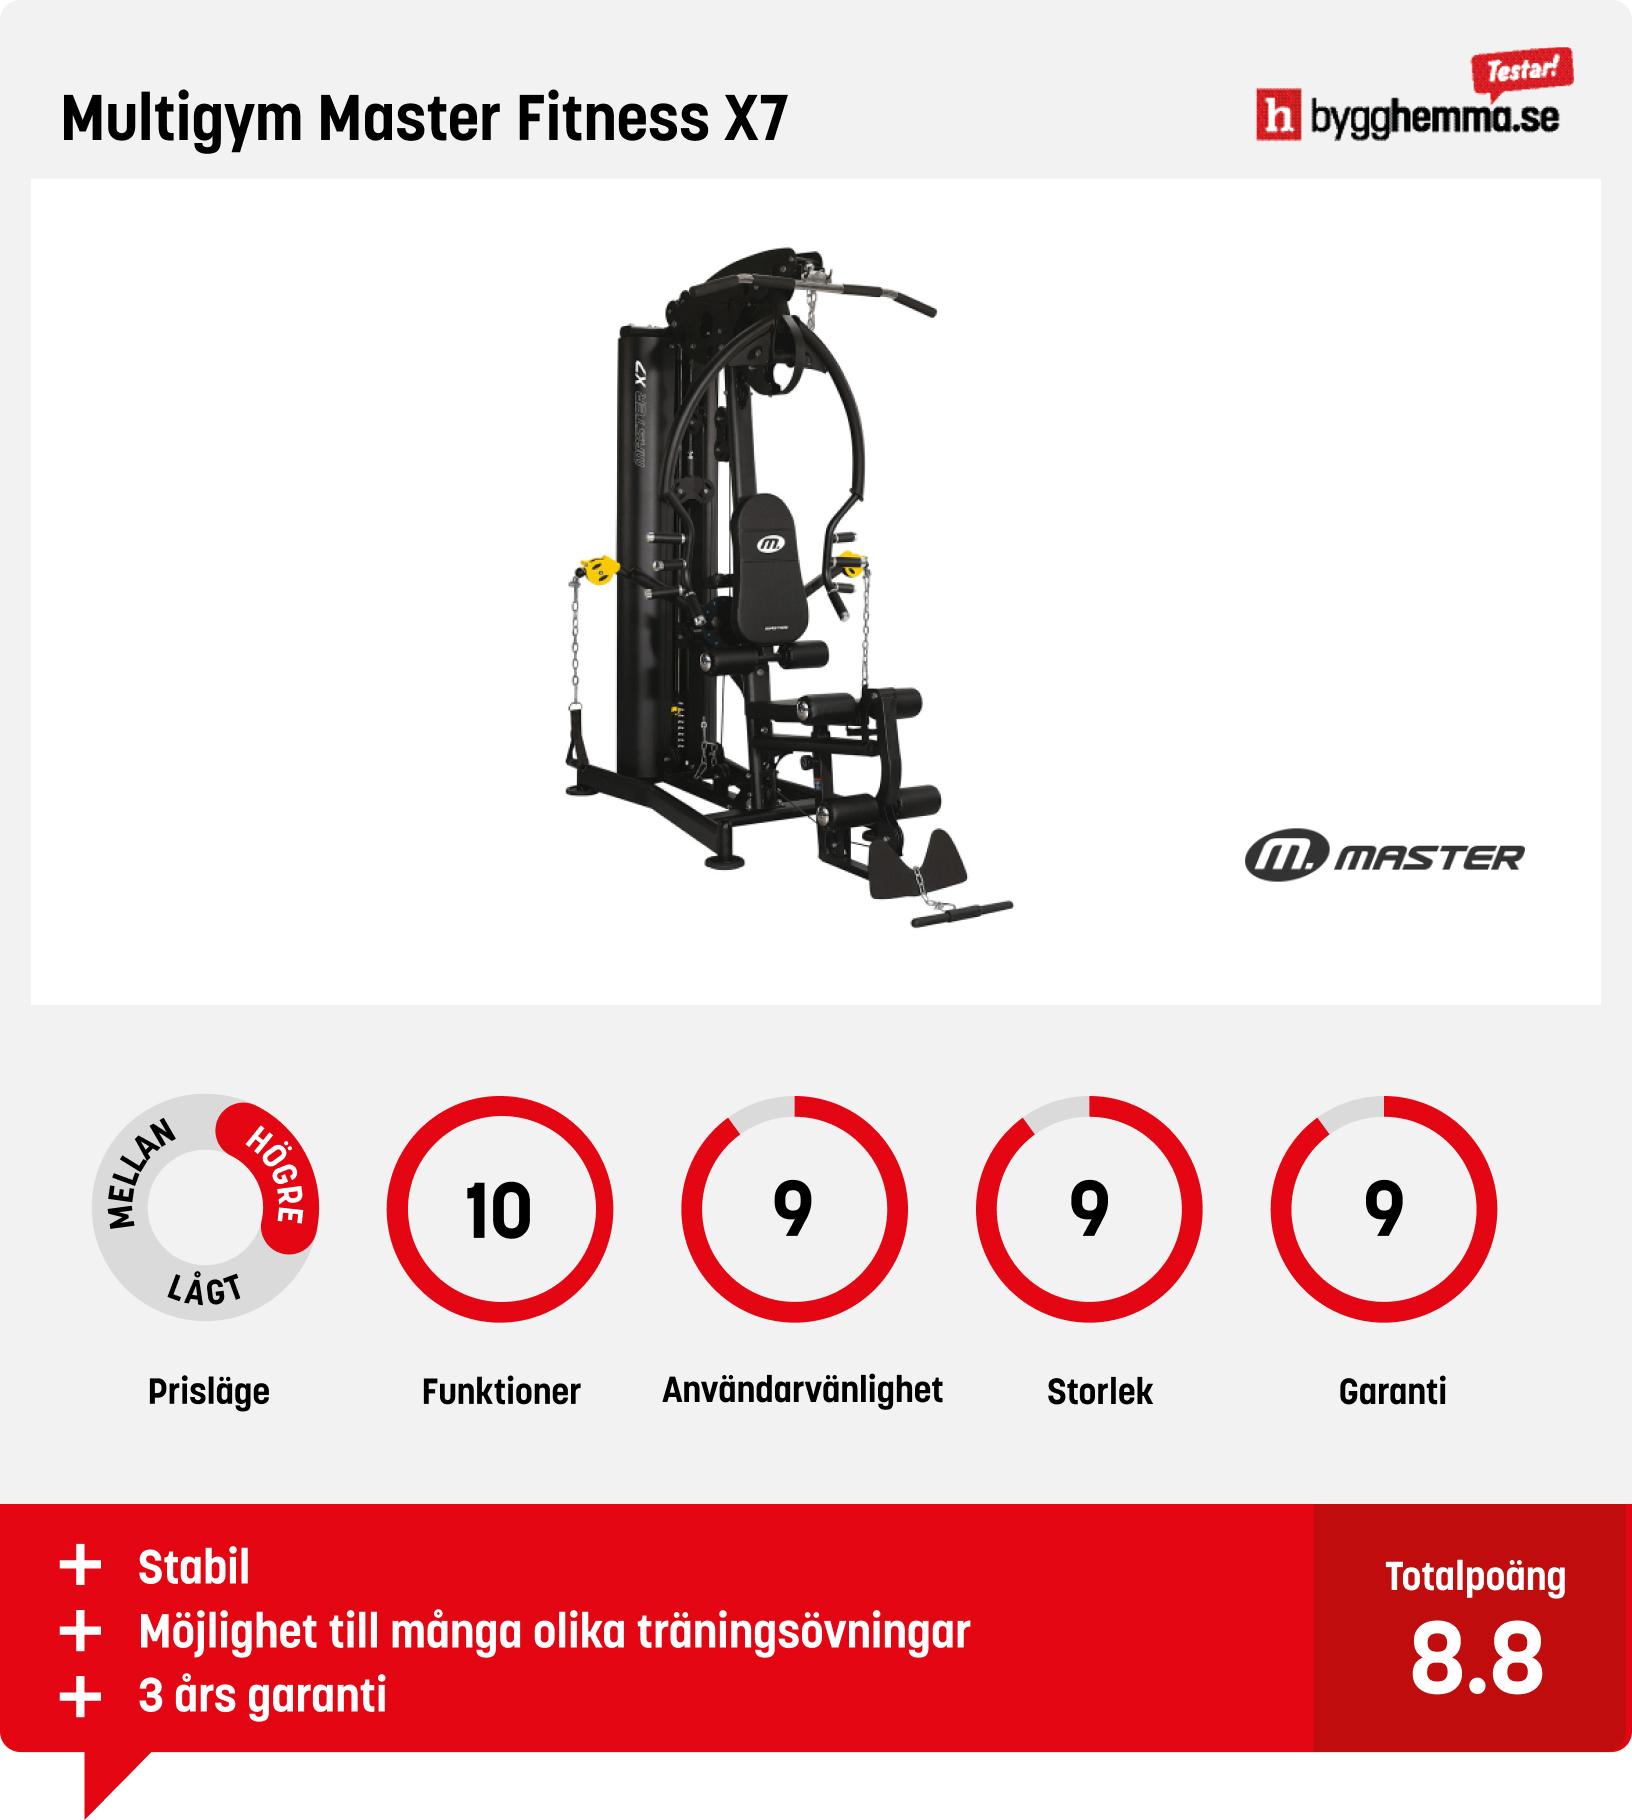 Multigym bäst i test - Multigym Master Fitness X7